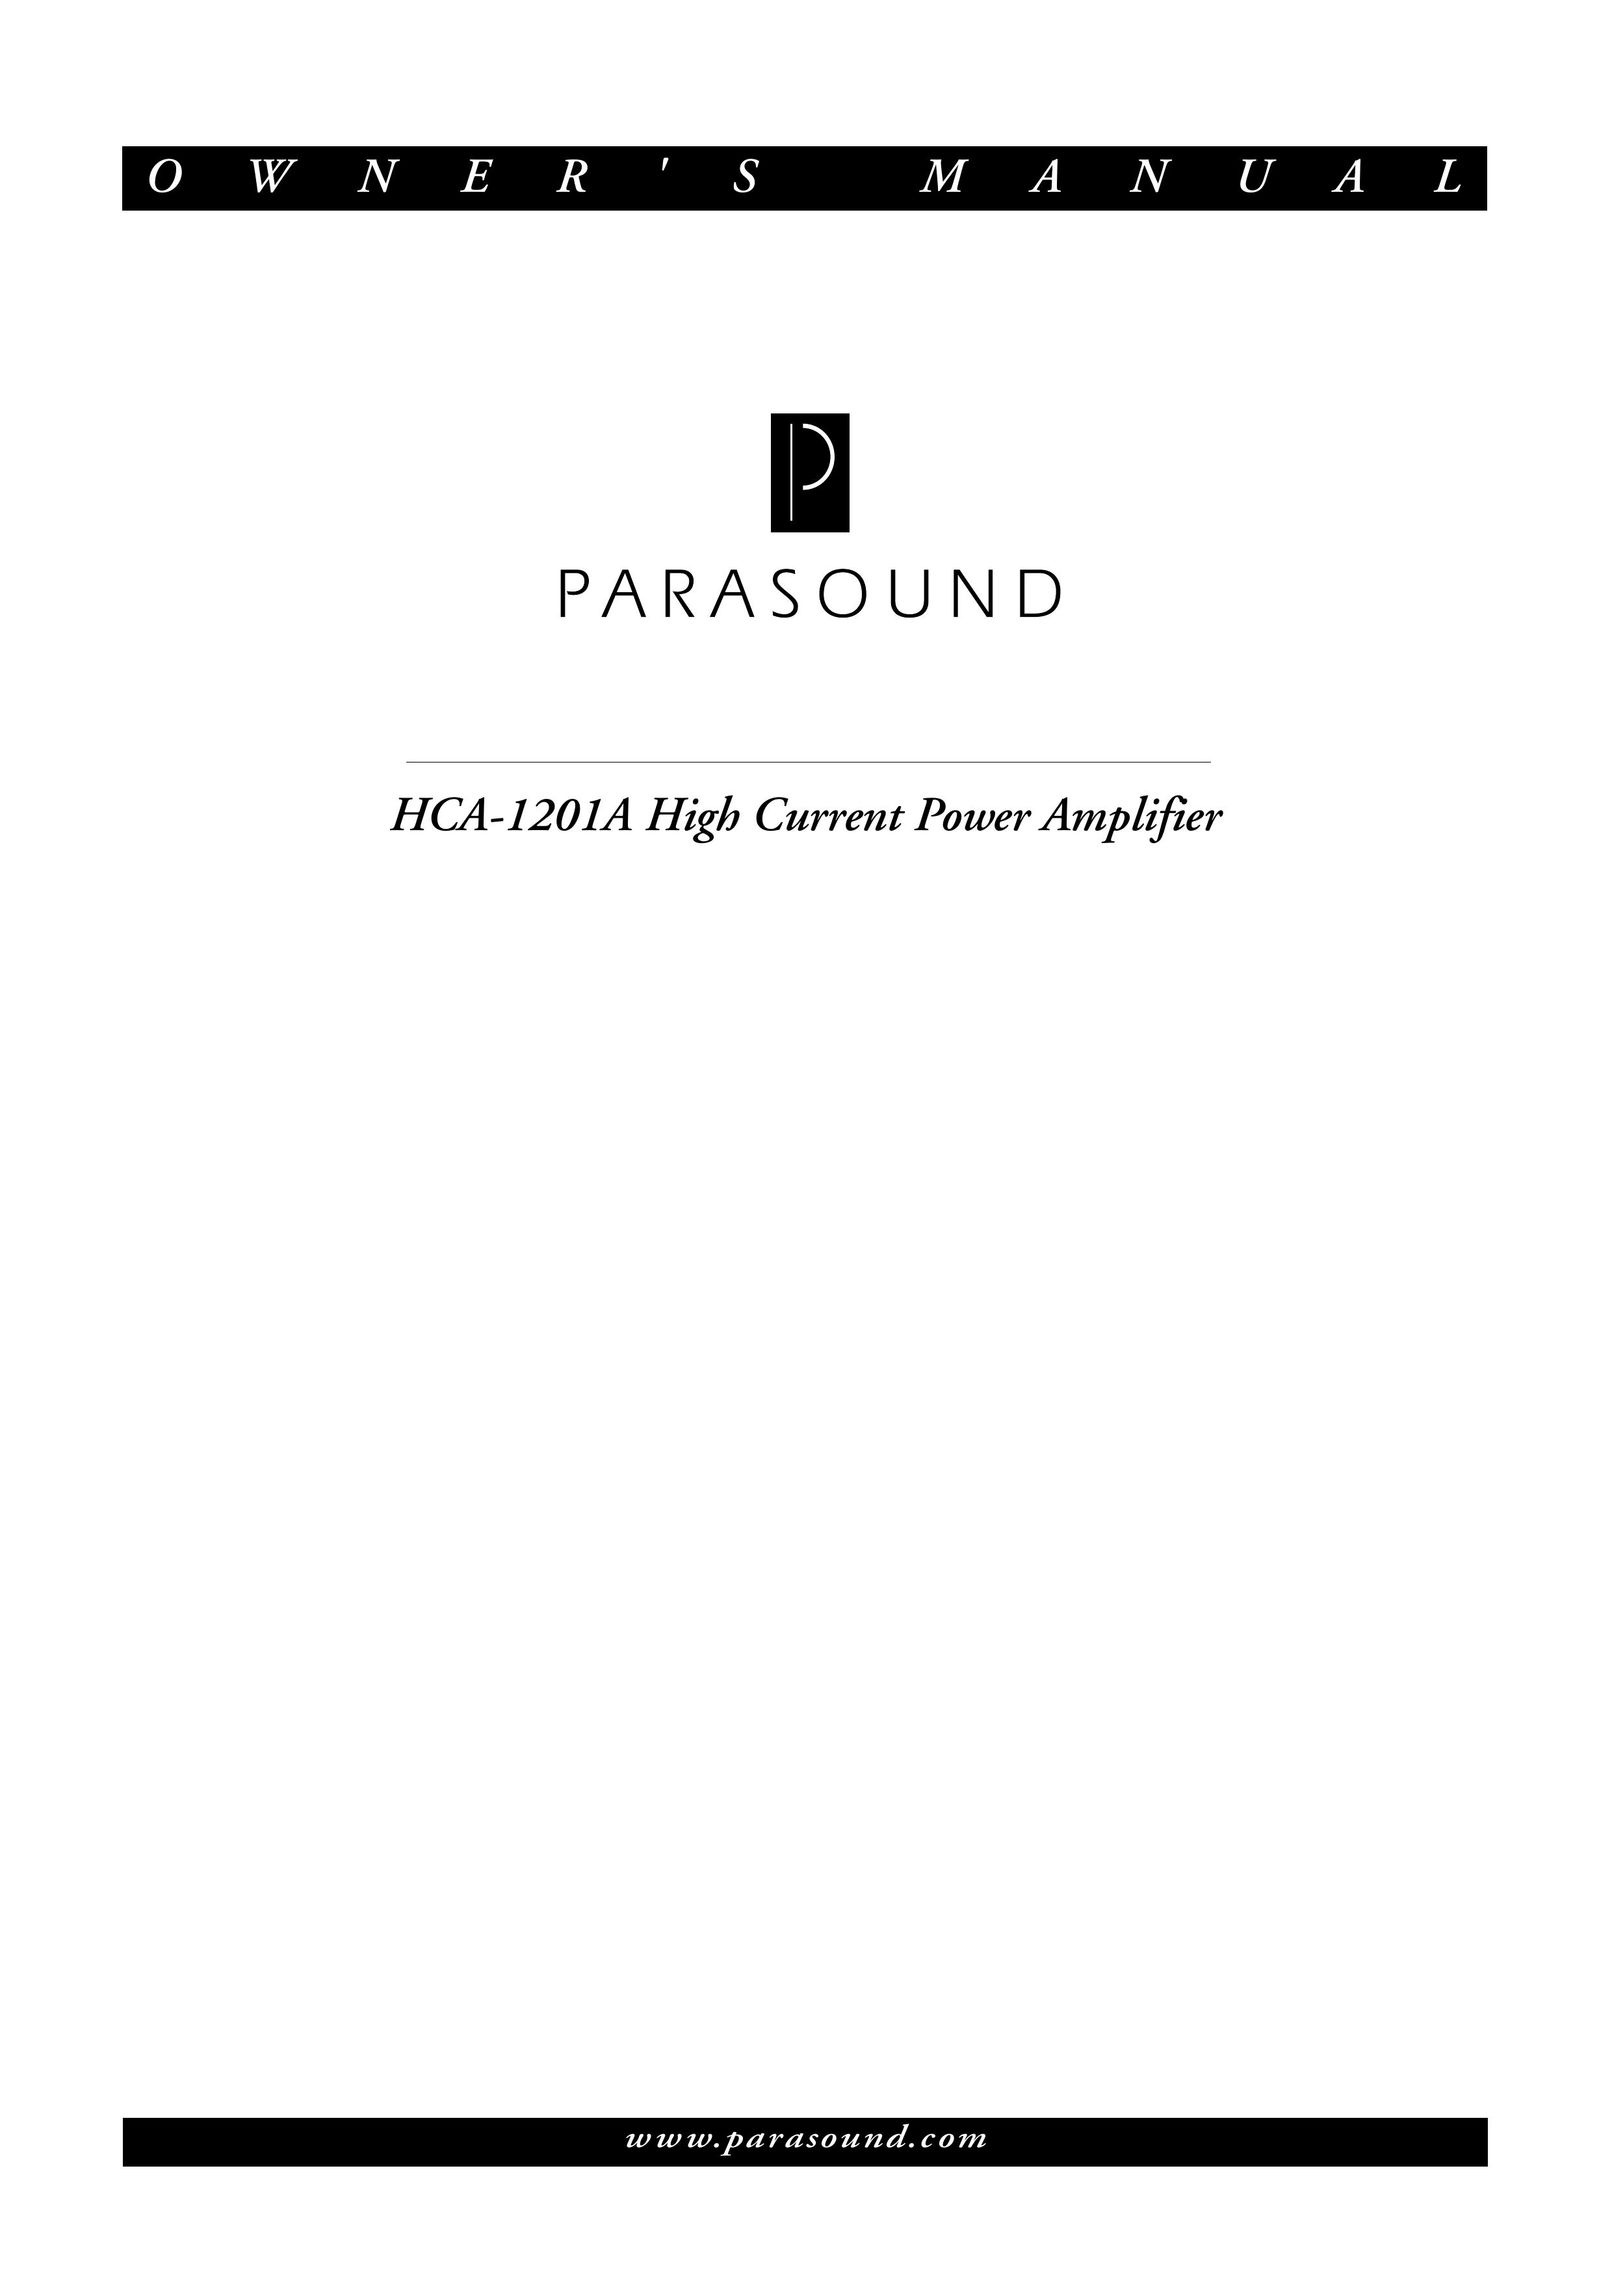 Parasound HCA-1201A Stereo Amplifier User Manual